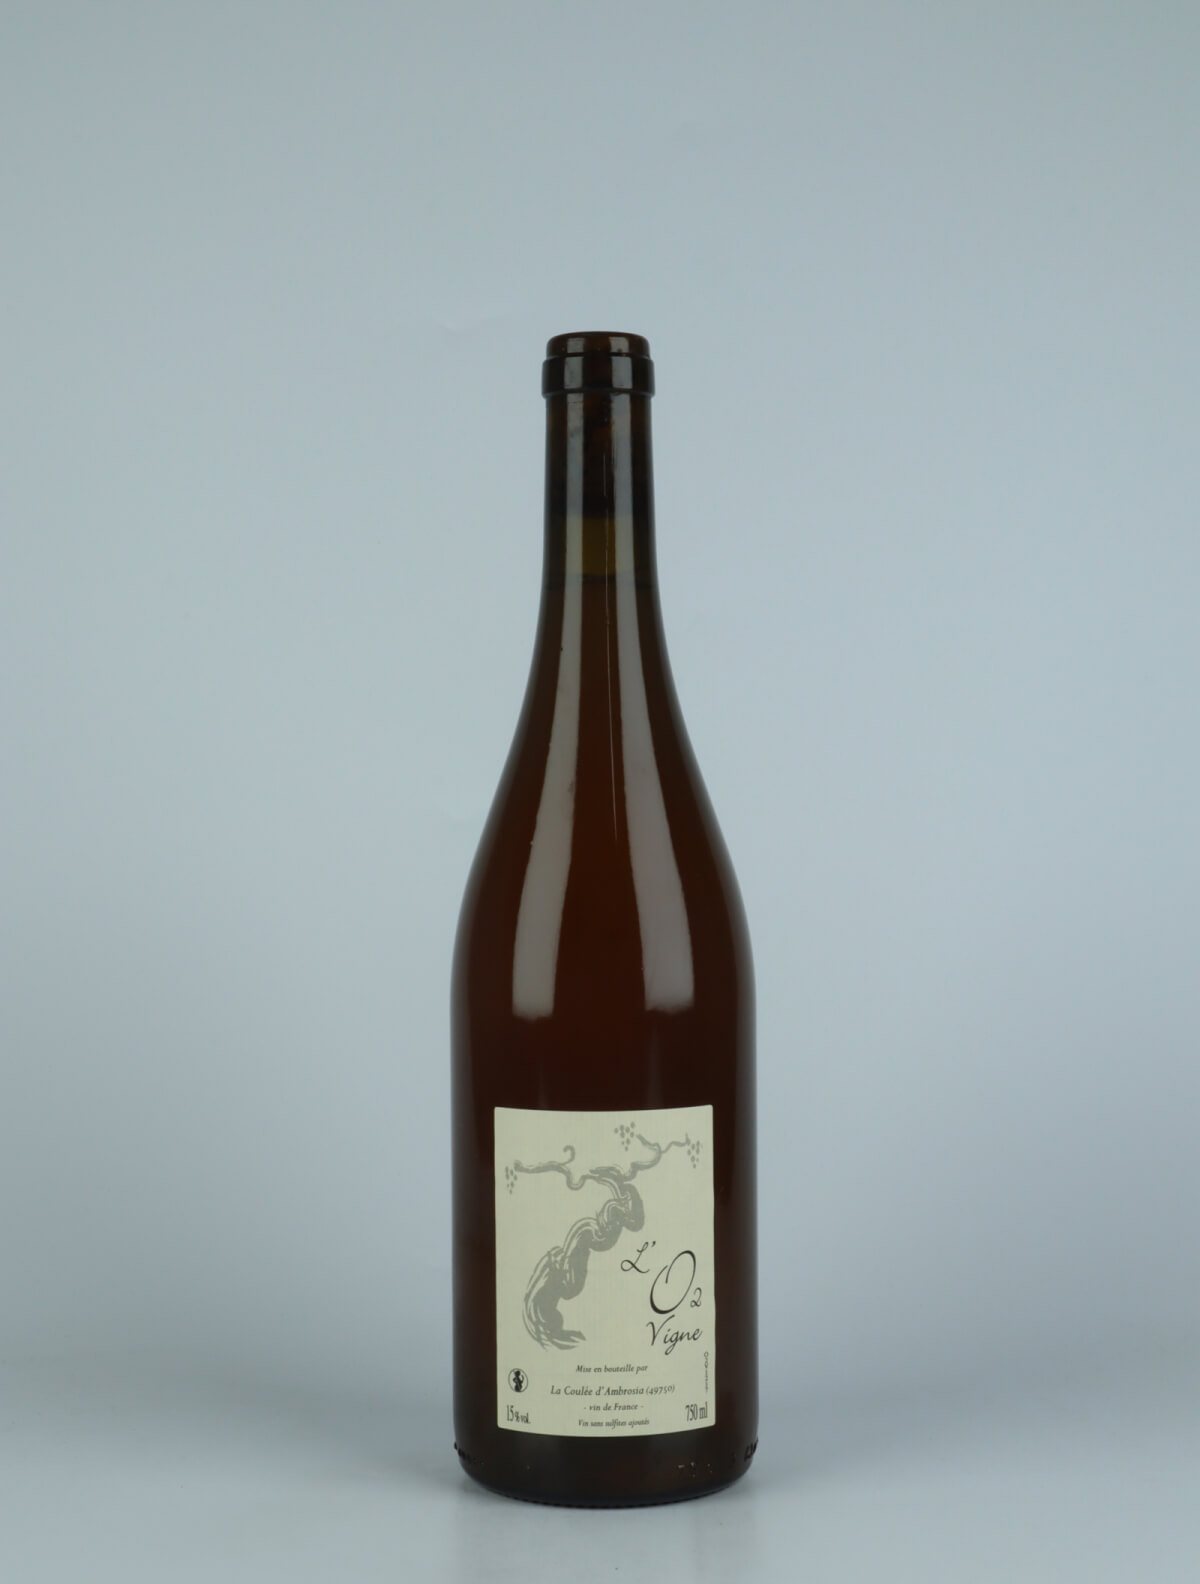 A bottle 2012 O2 Vigne White wine from Jean-Francois Chene, Loire in France